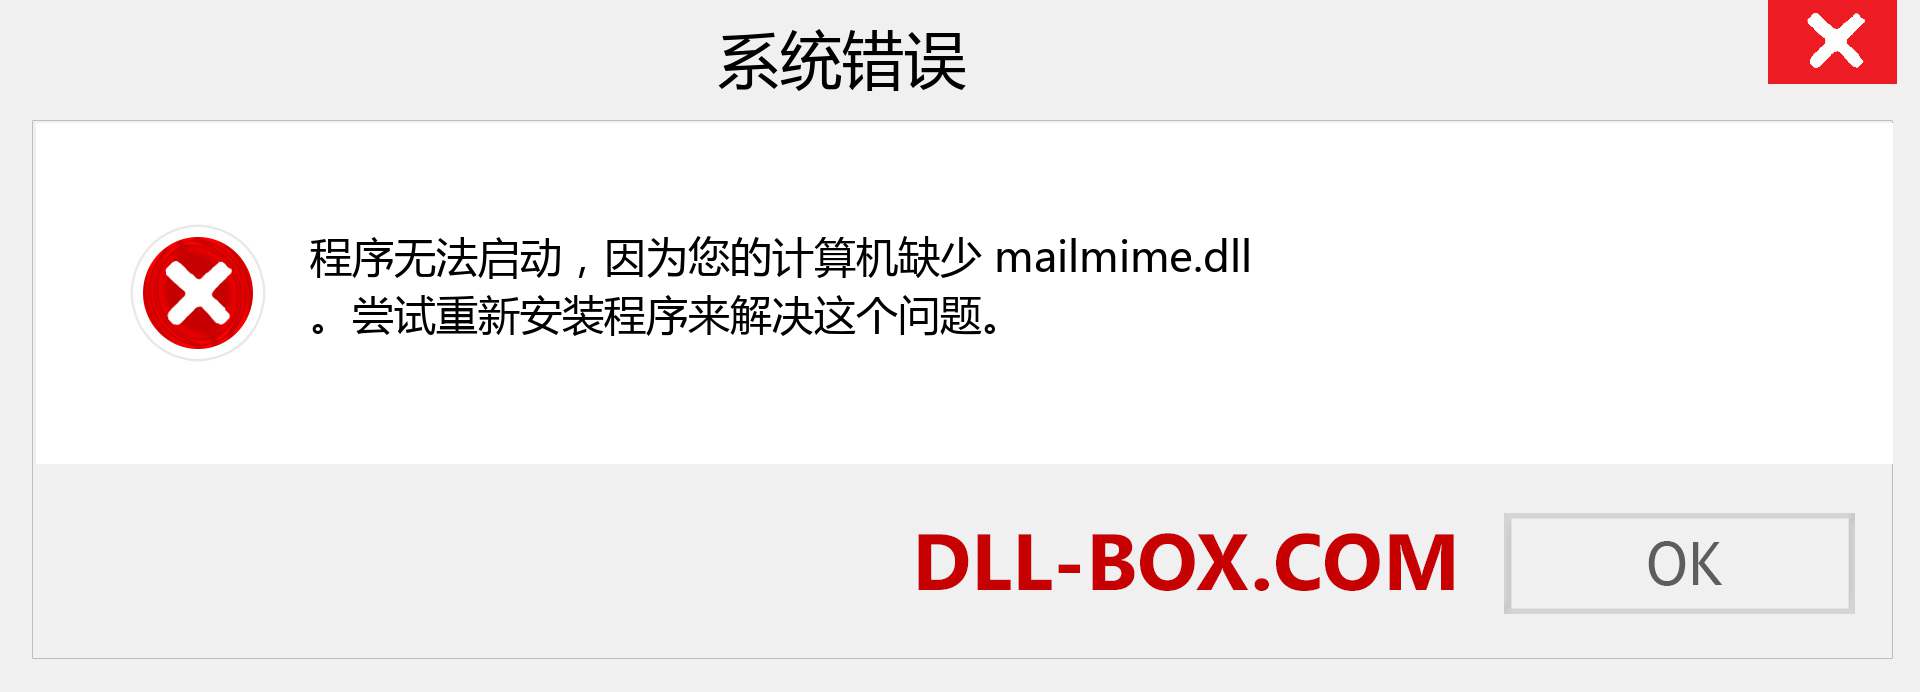 mailmime.dll 文件丢失？。 适用于 Windows 7、8、10 的下载 - 修复 Windows、照片、图像上的 mailmime dll 丢失错误